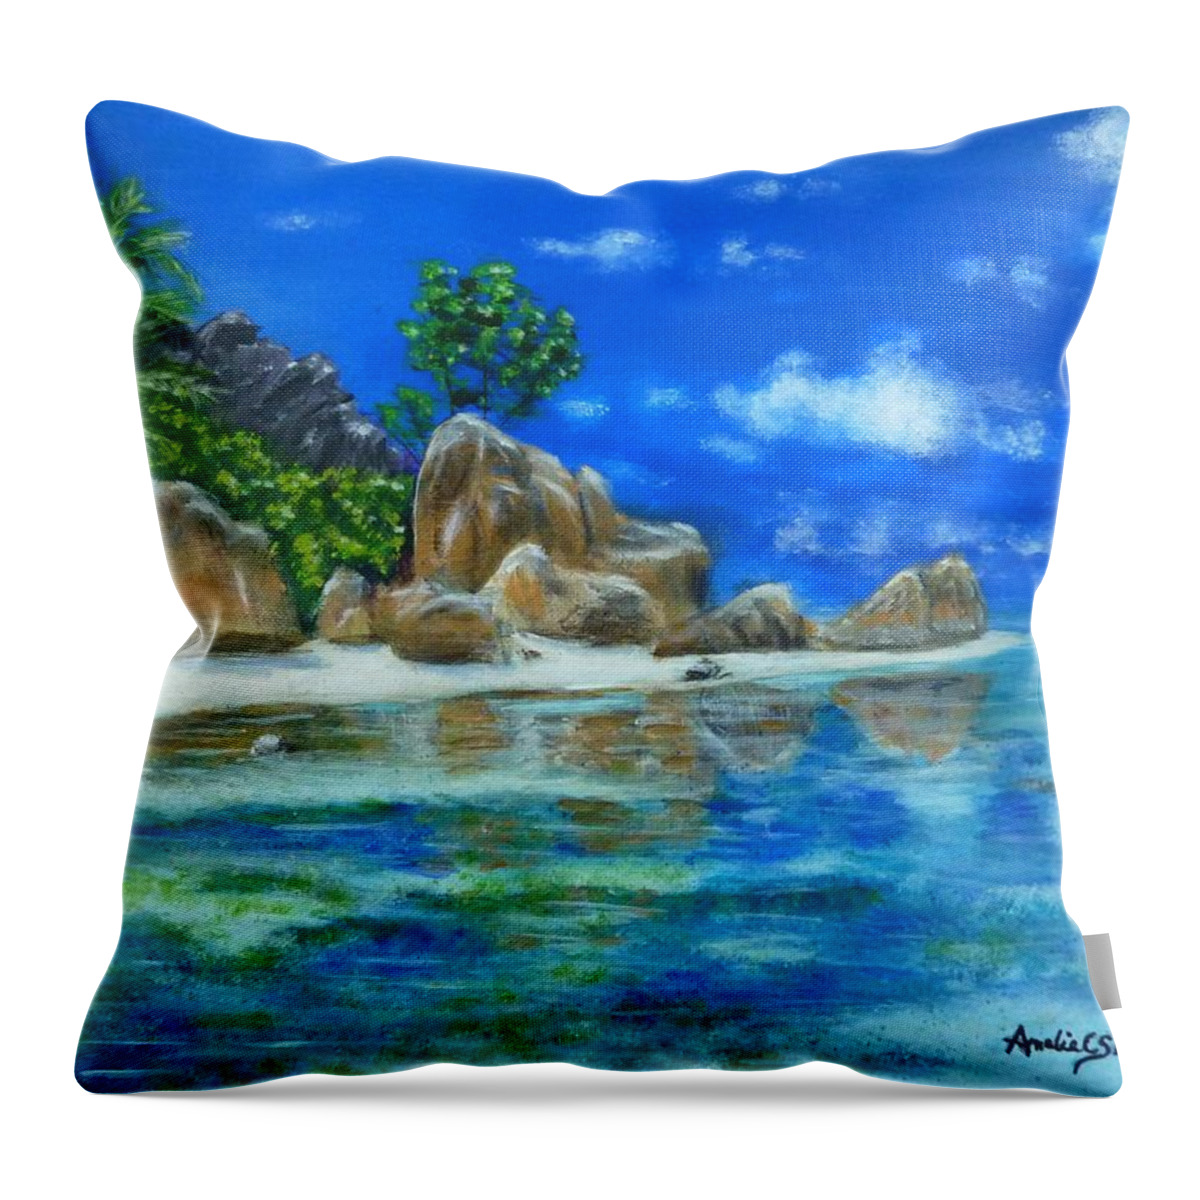 Nina's Beach Throw Pillow featuring the painting Nina's Beach by Amelie Simmons